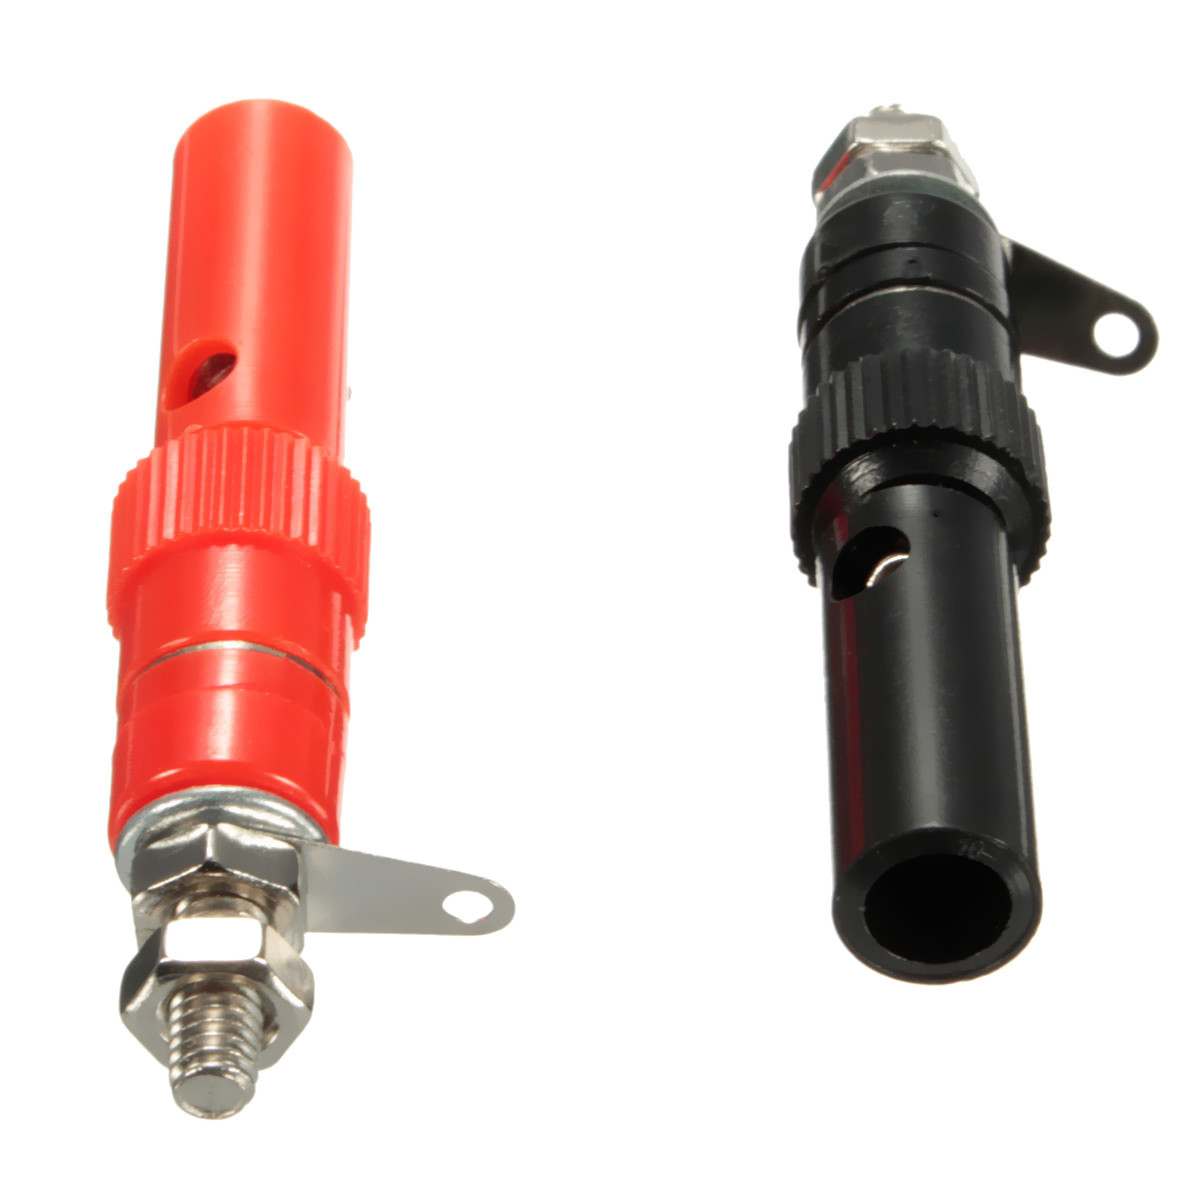 DANIU-10-Pairs-4mm-Terminal-Banana-Plug-Socket-Jack-Connectors-Instrument-Light-Tools-Black-and-Red-1046083-9